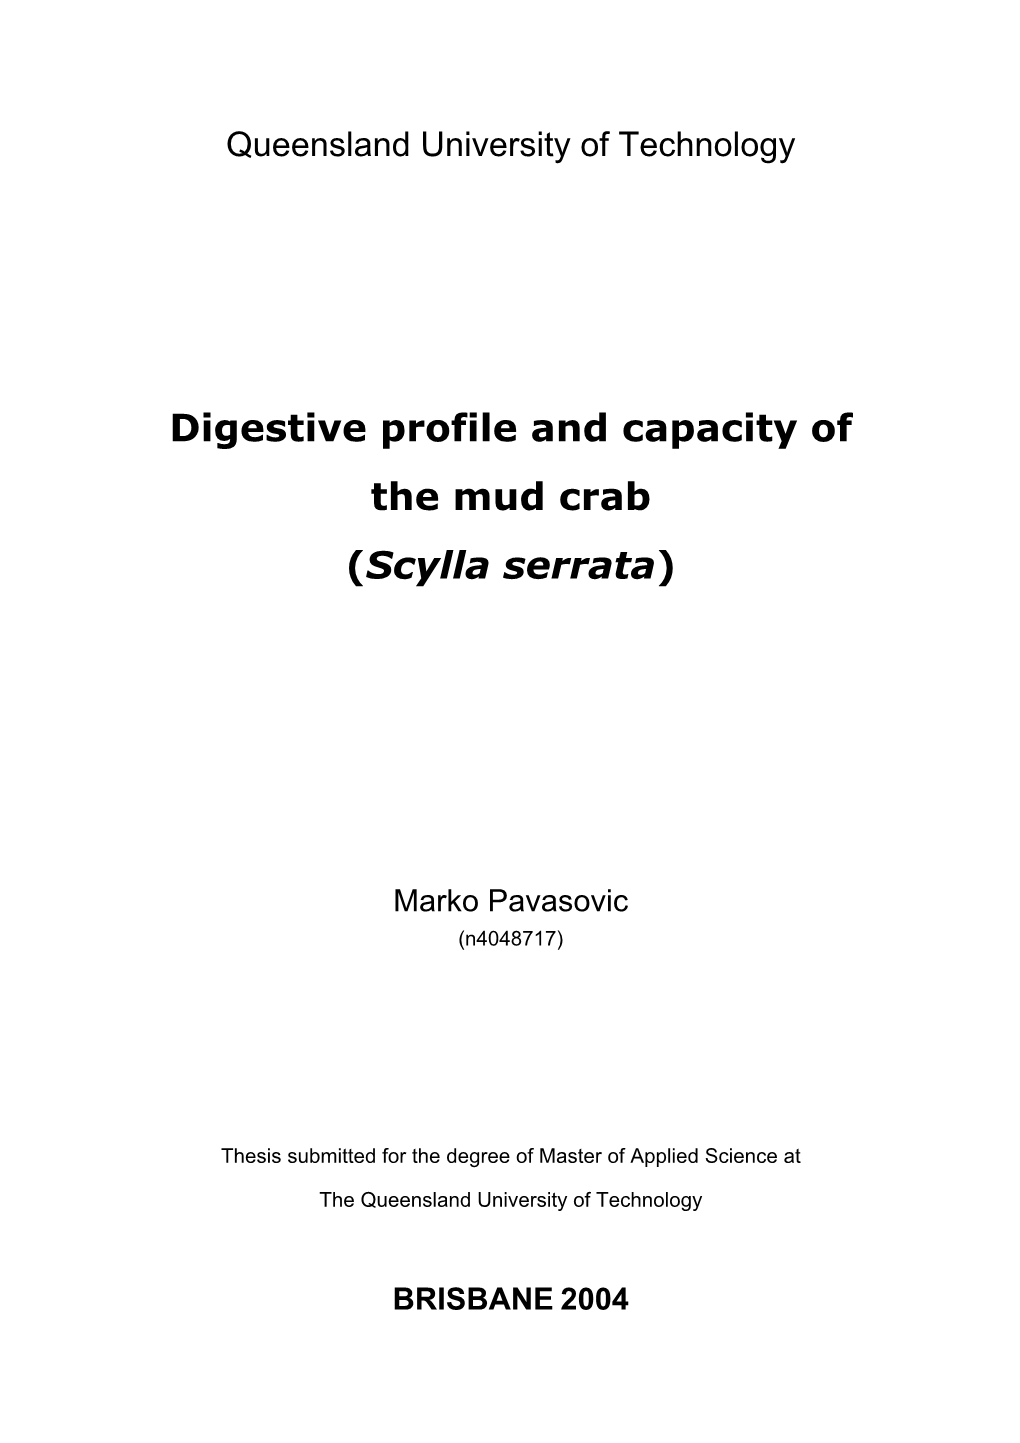 Digestive Profile and Capacity of the Mud Crab (Scylla Serrata )